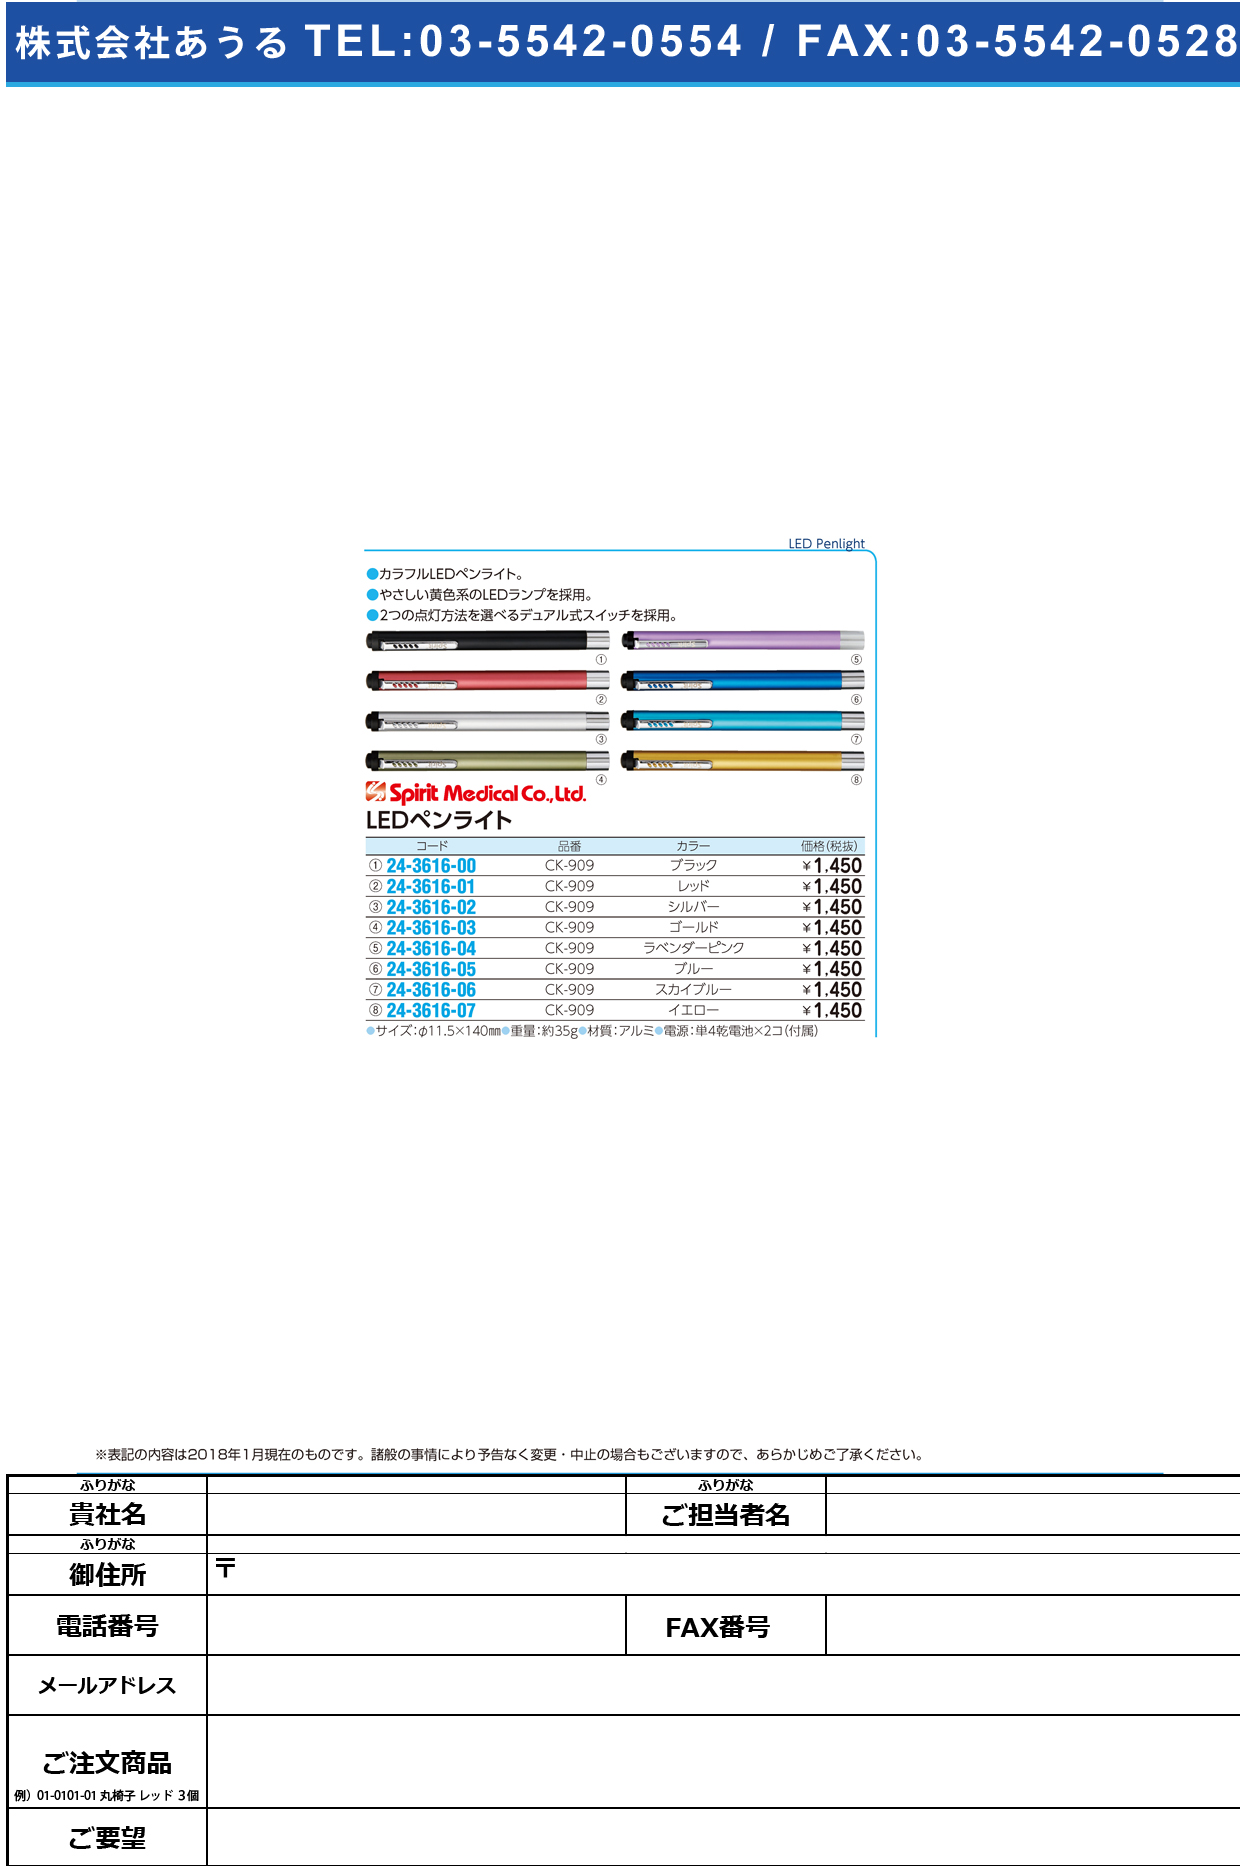 (24-3616-05)ＳｐｉｒｉｔＬＥＤペンライト CK-909(ﾌﾞﾙｰ) SPIRITLEDﾍﾟﾝﾗｲﾄ(スピリット・メディカル社)【1台単位】【2019年カタログ商品】